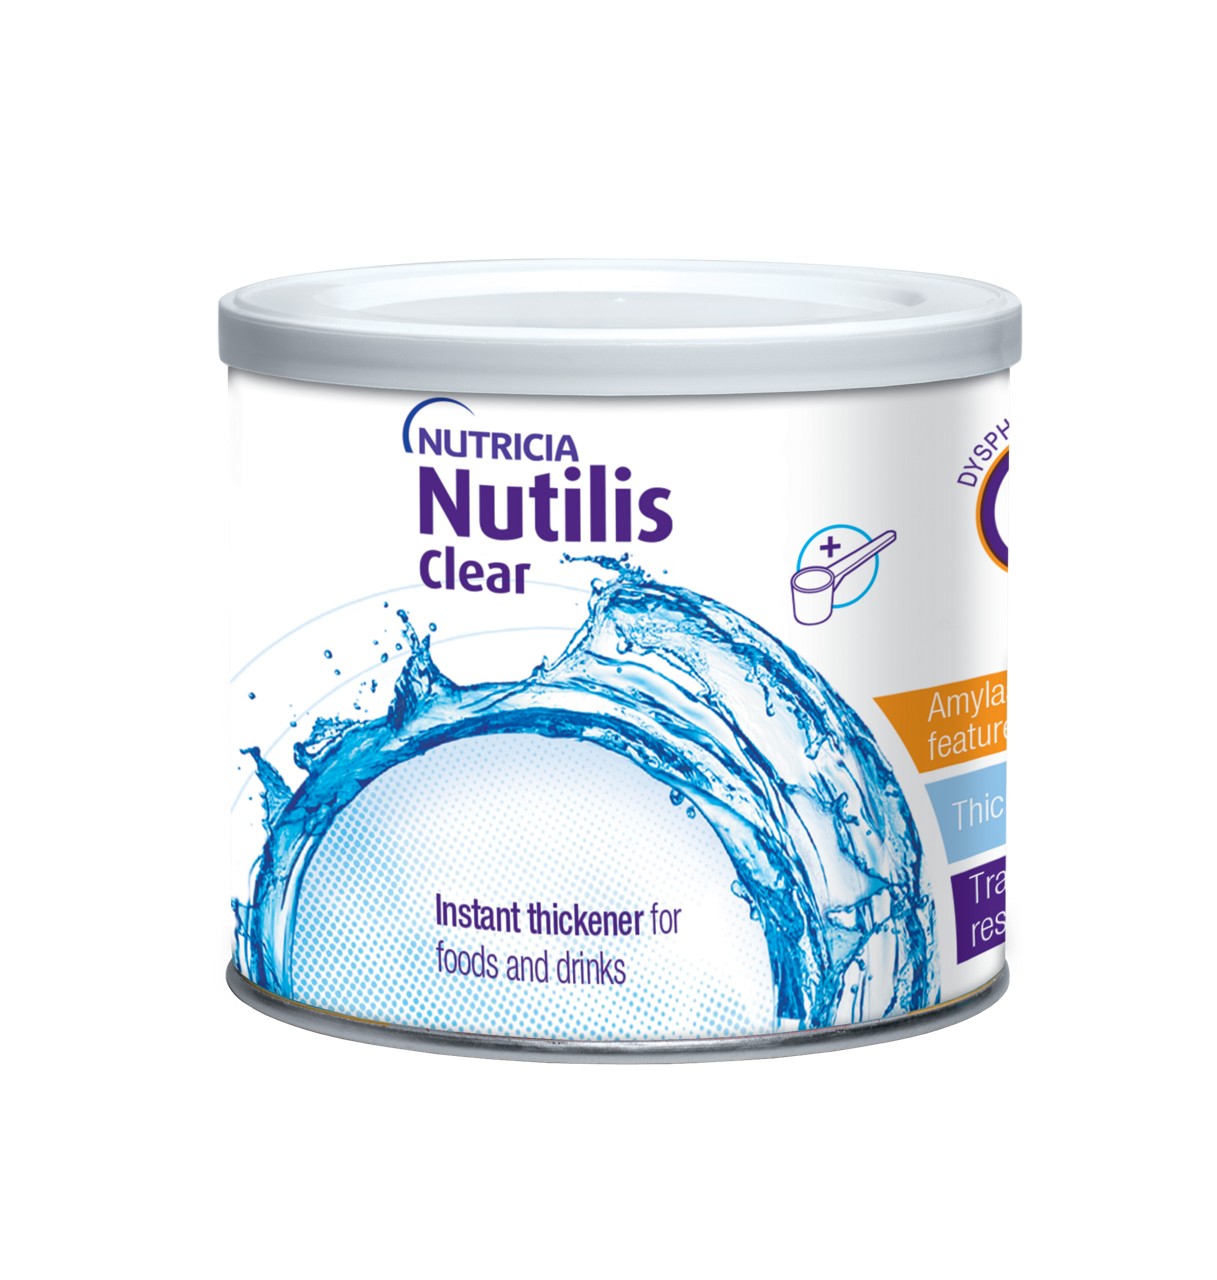 Nutilis Clear tin